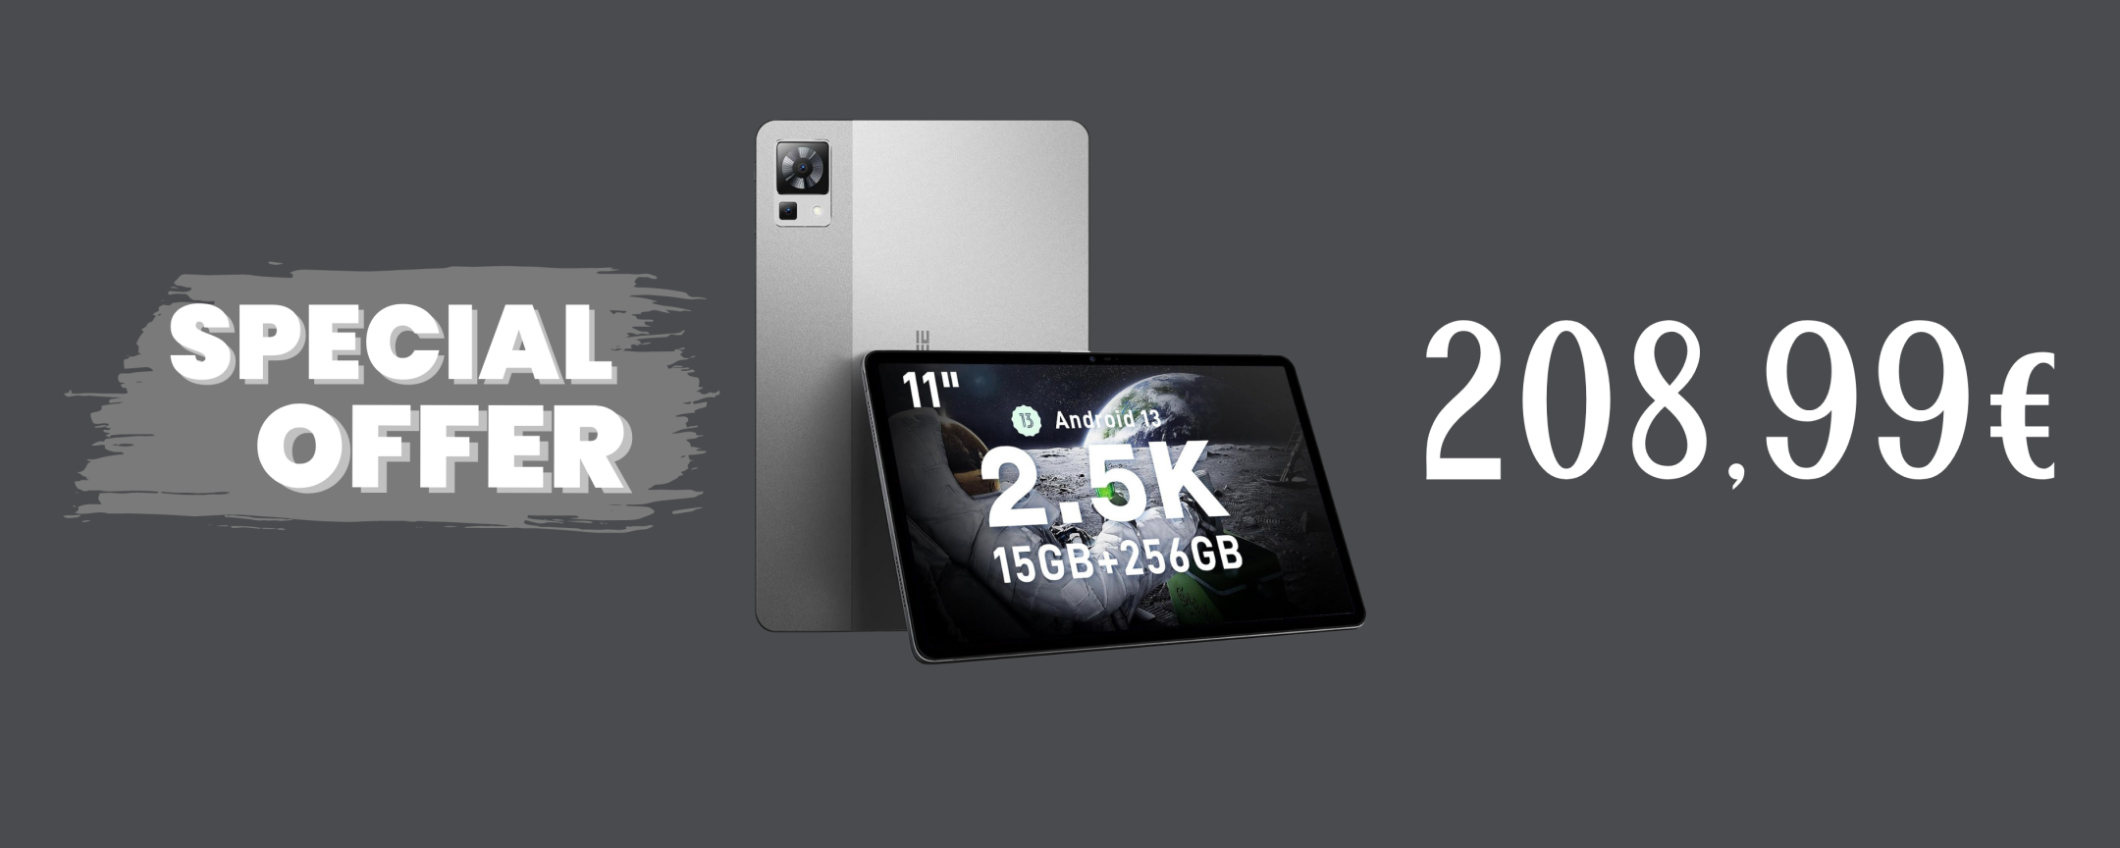 DOOGEE T30 Pro, tablet con display da 2,5K a SOLI 208,99€